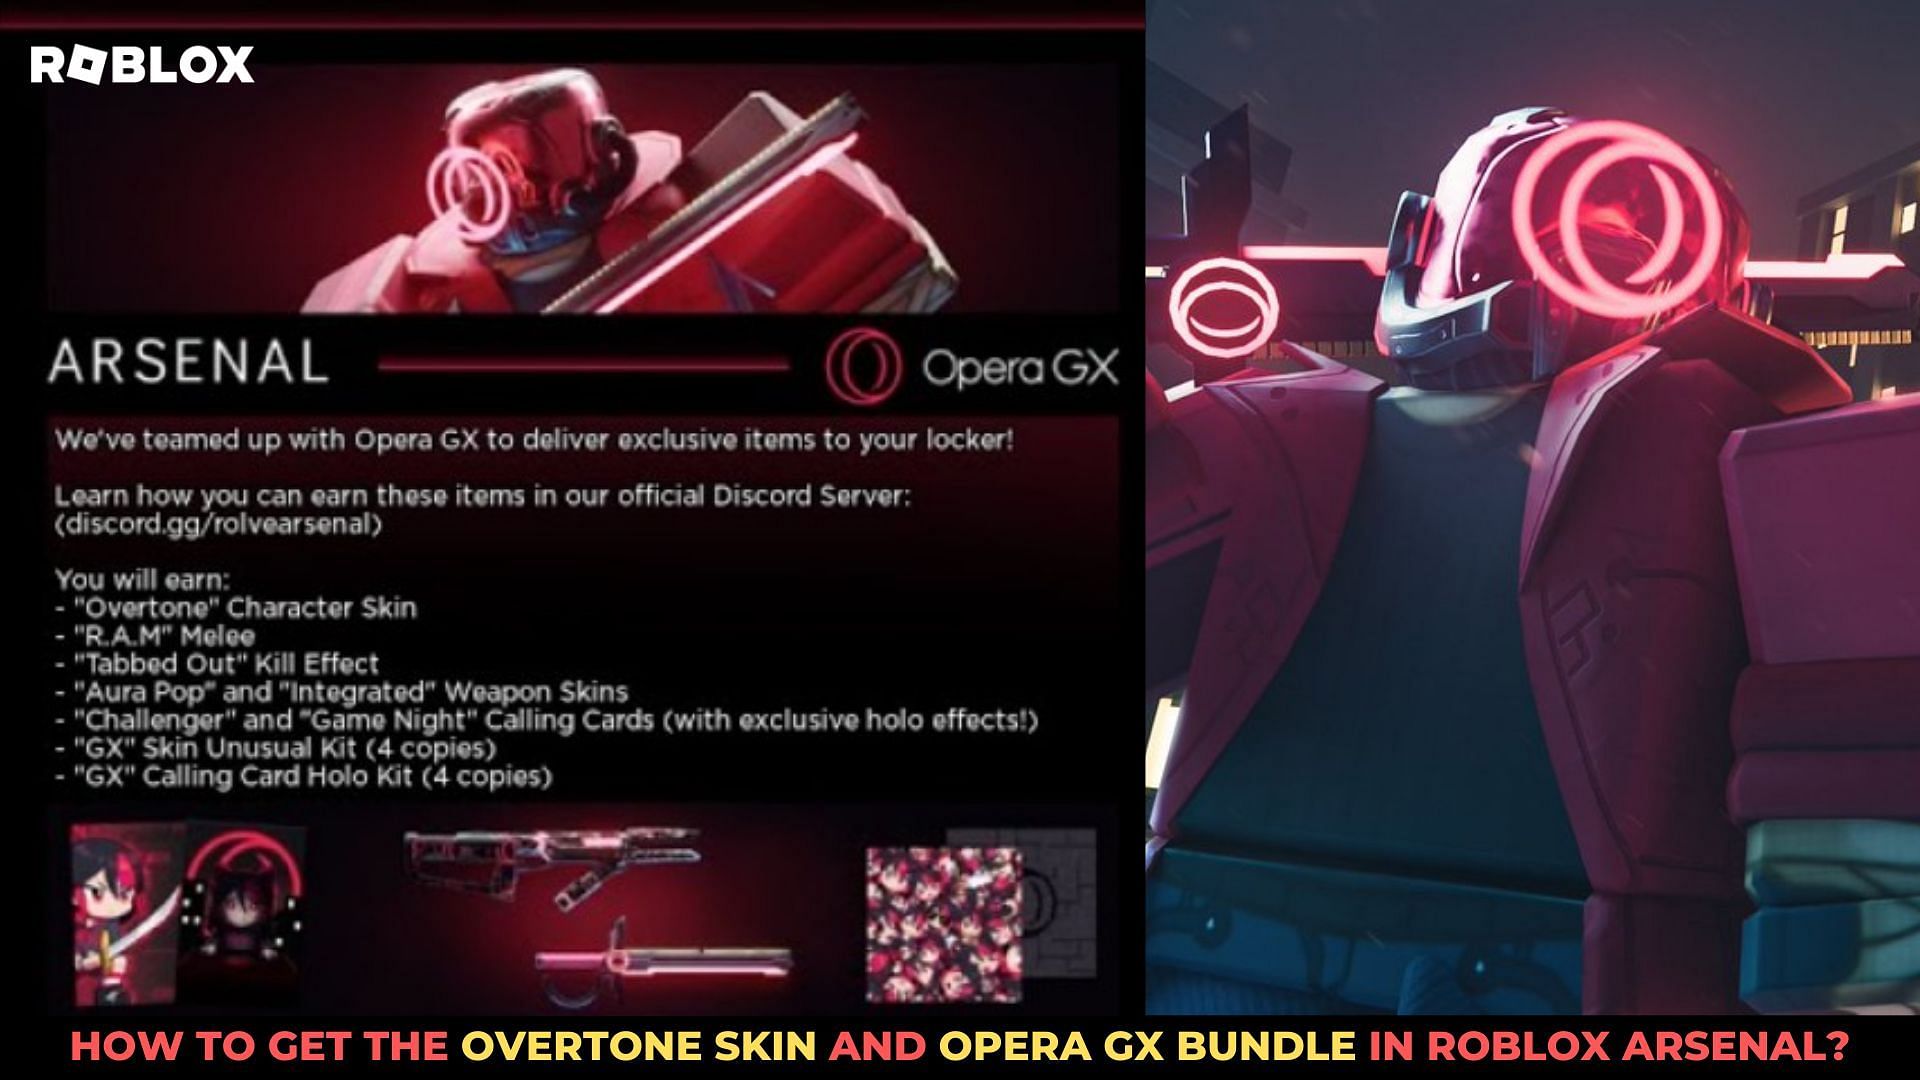 Featured image of the Overtone Skin and Opera GX bundle (Image via Sportskeeda)